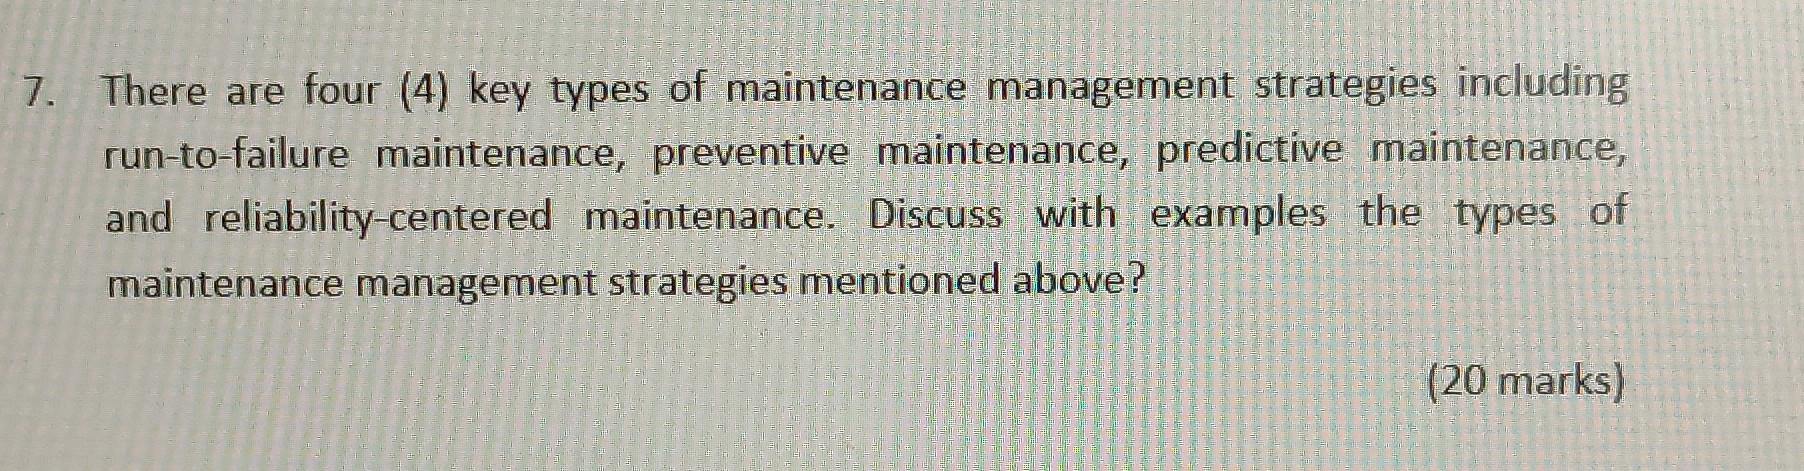 4 types of maintenance